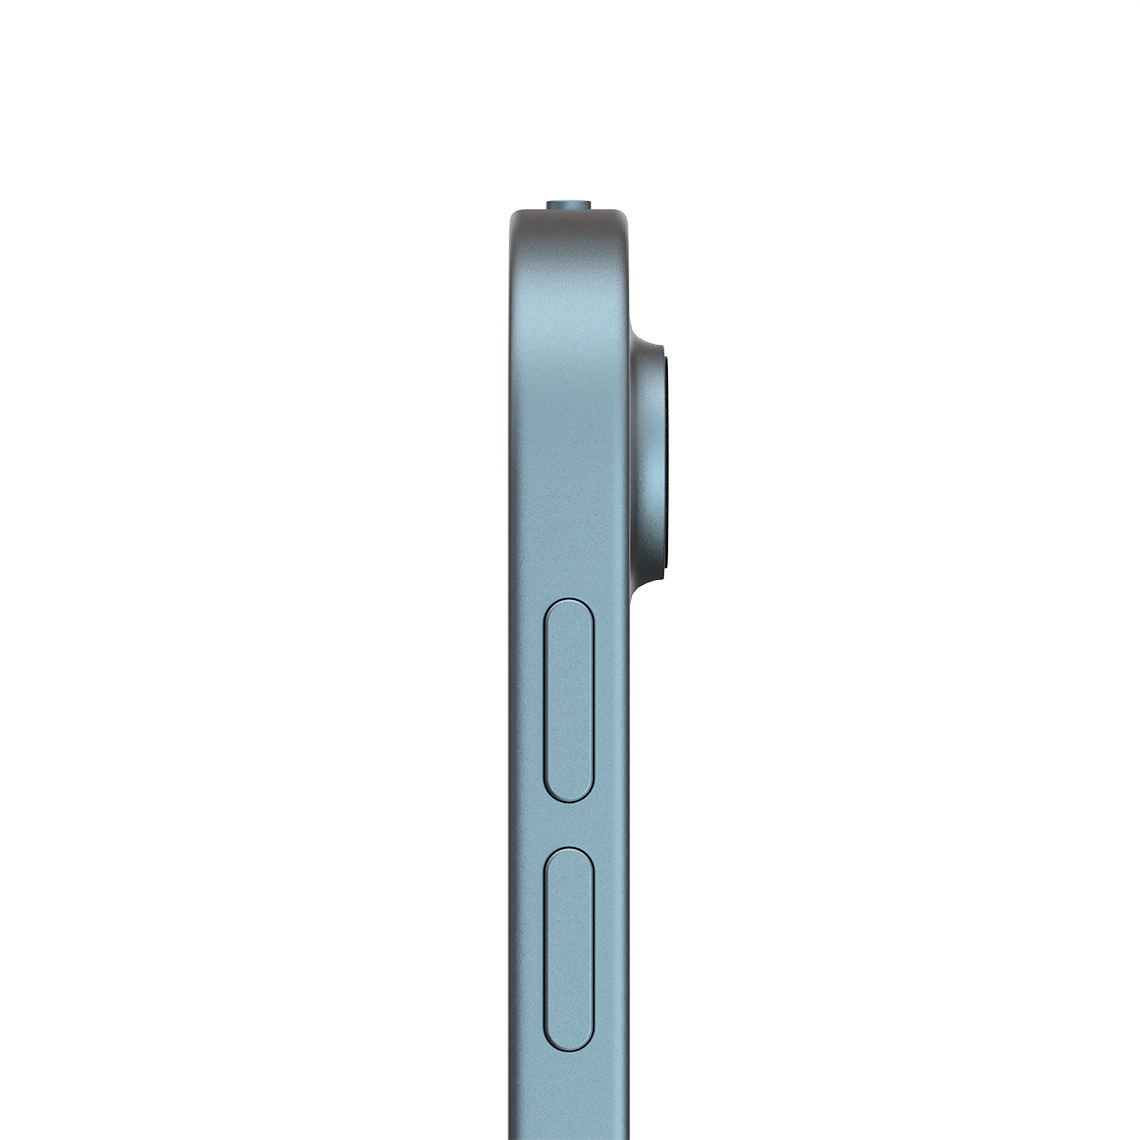 Apple iPad Air 10.9-inch 5th Generation - Blue - 256GB, Wi-Fi, Grade B